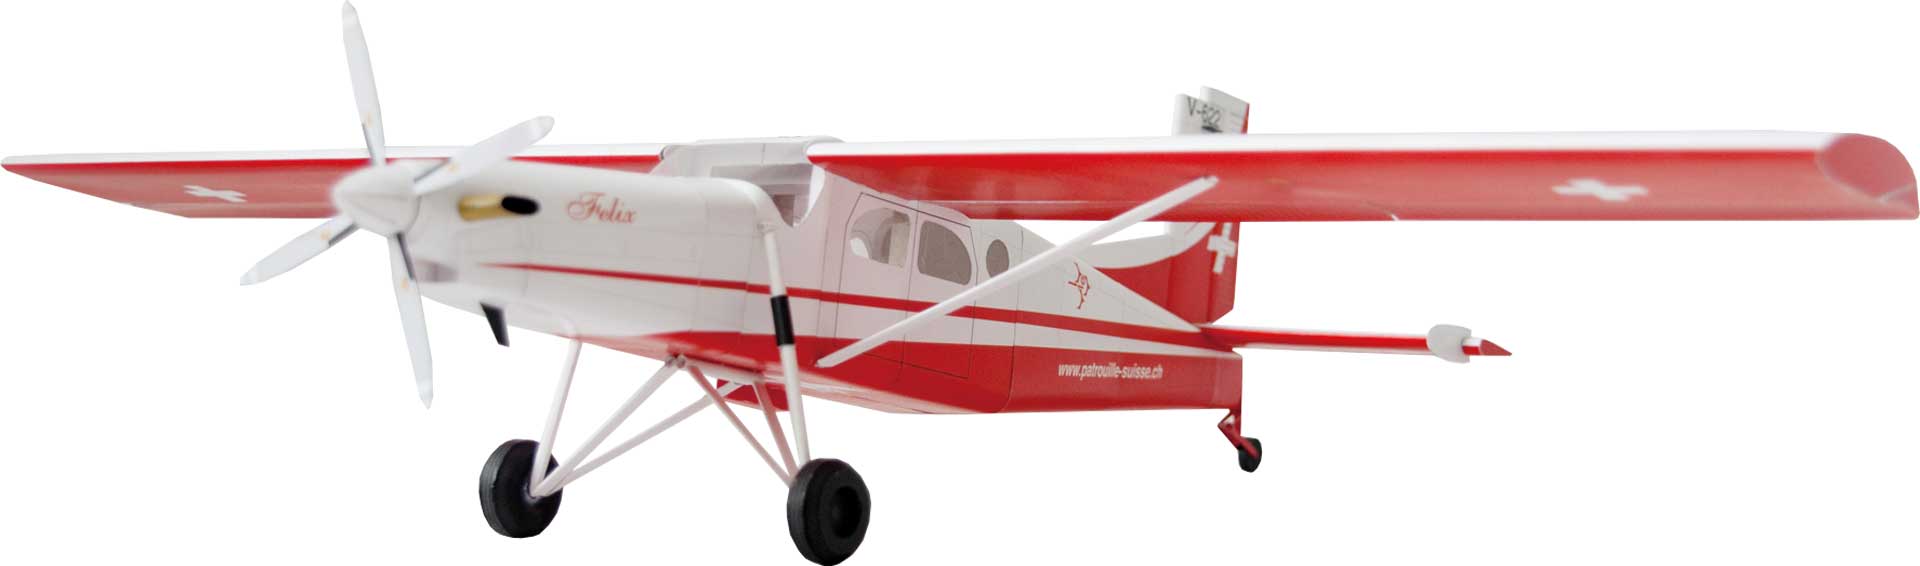 PAPER-MODEL Pilatus PC6 Turbo-Porter 1:33 Cardboard model made of paper and cardboard